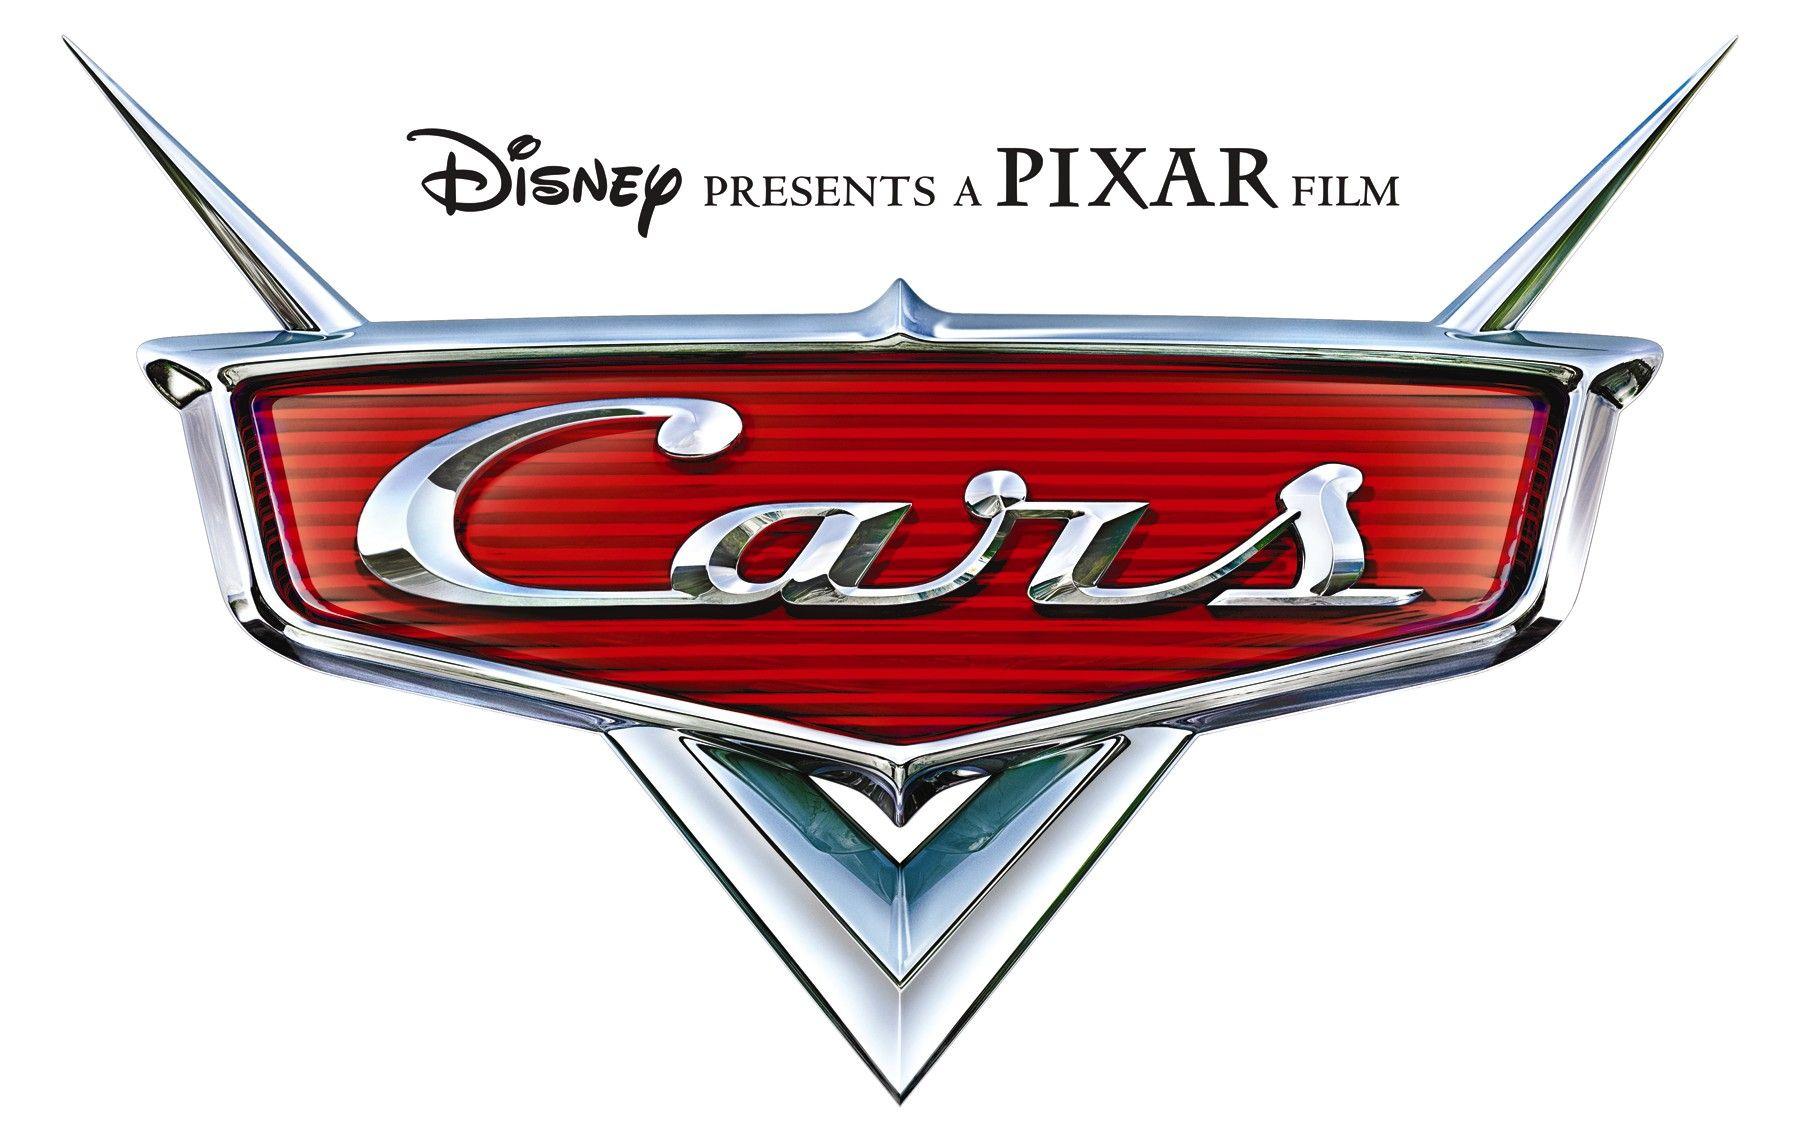 Disney Presents a Pixar Film Cars Logo - Cars (series) | Logopedia | FANDOM powered by Wikia